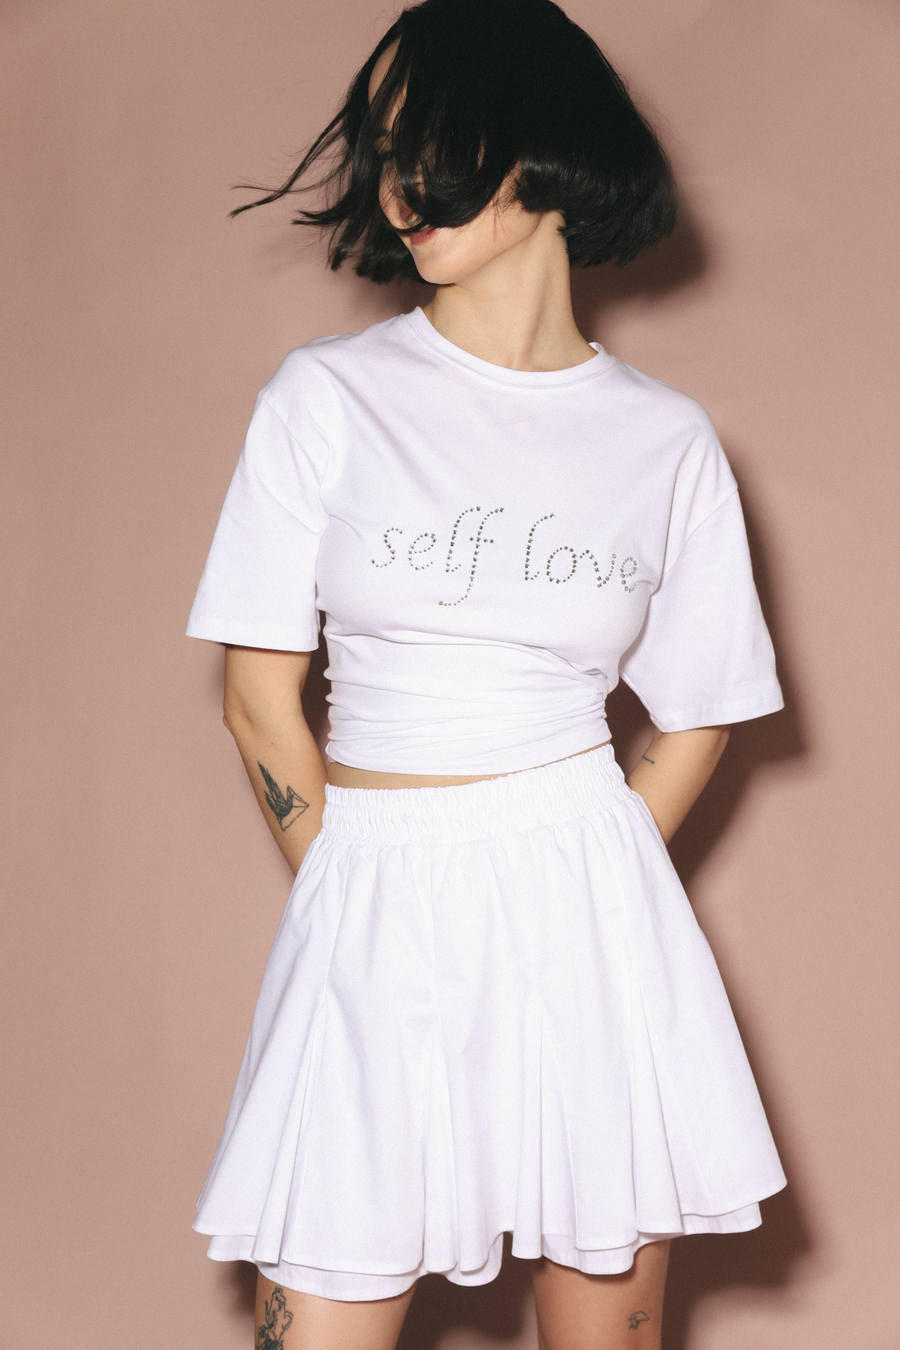 Self love: бренд One by One представил новую коллекцию